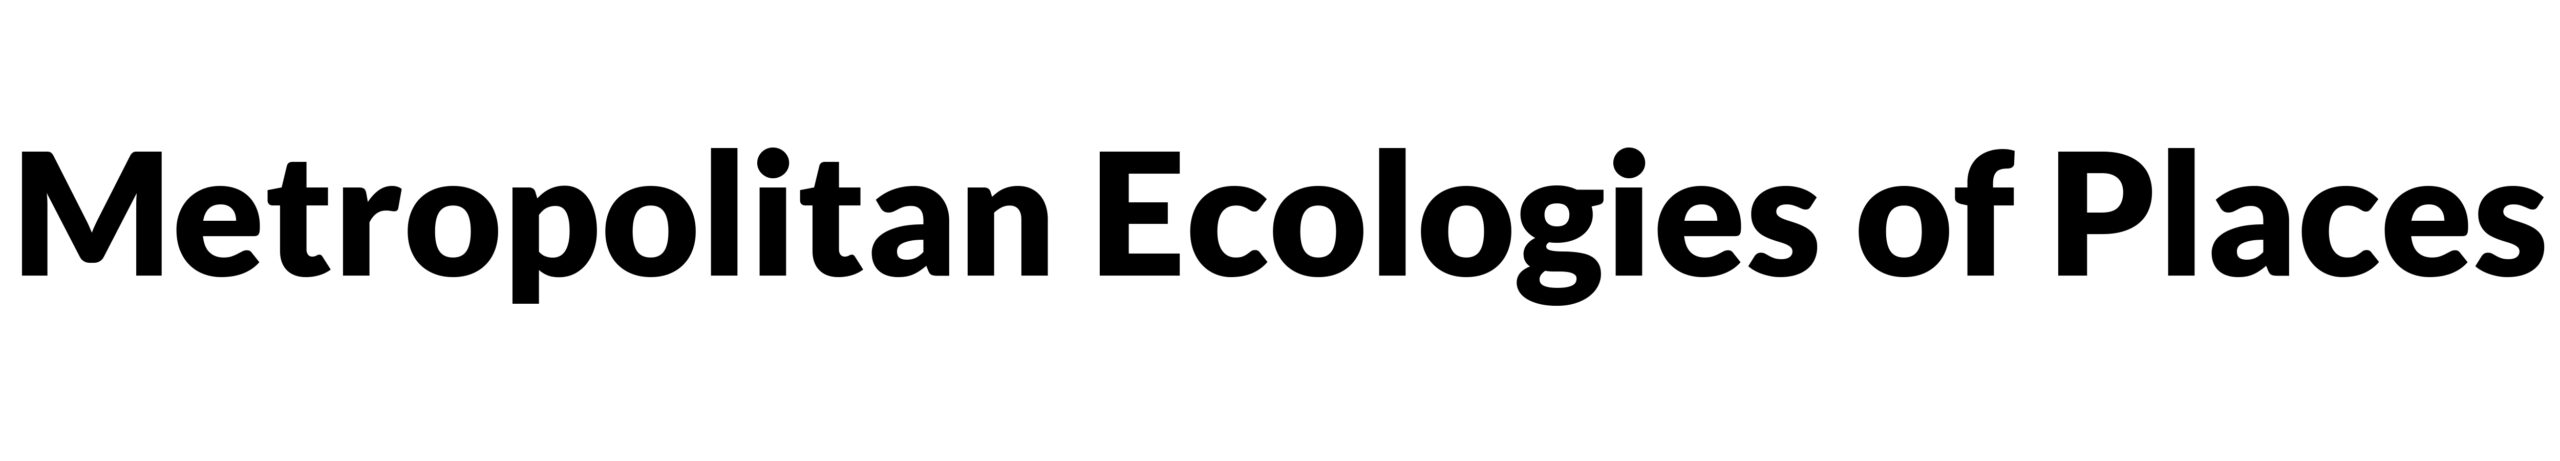 Metropolitan Ecologies of Places